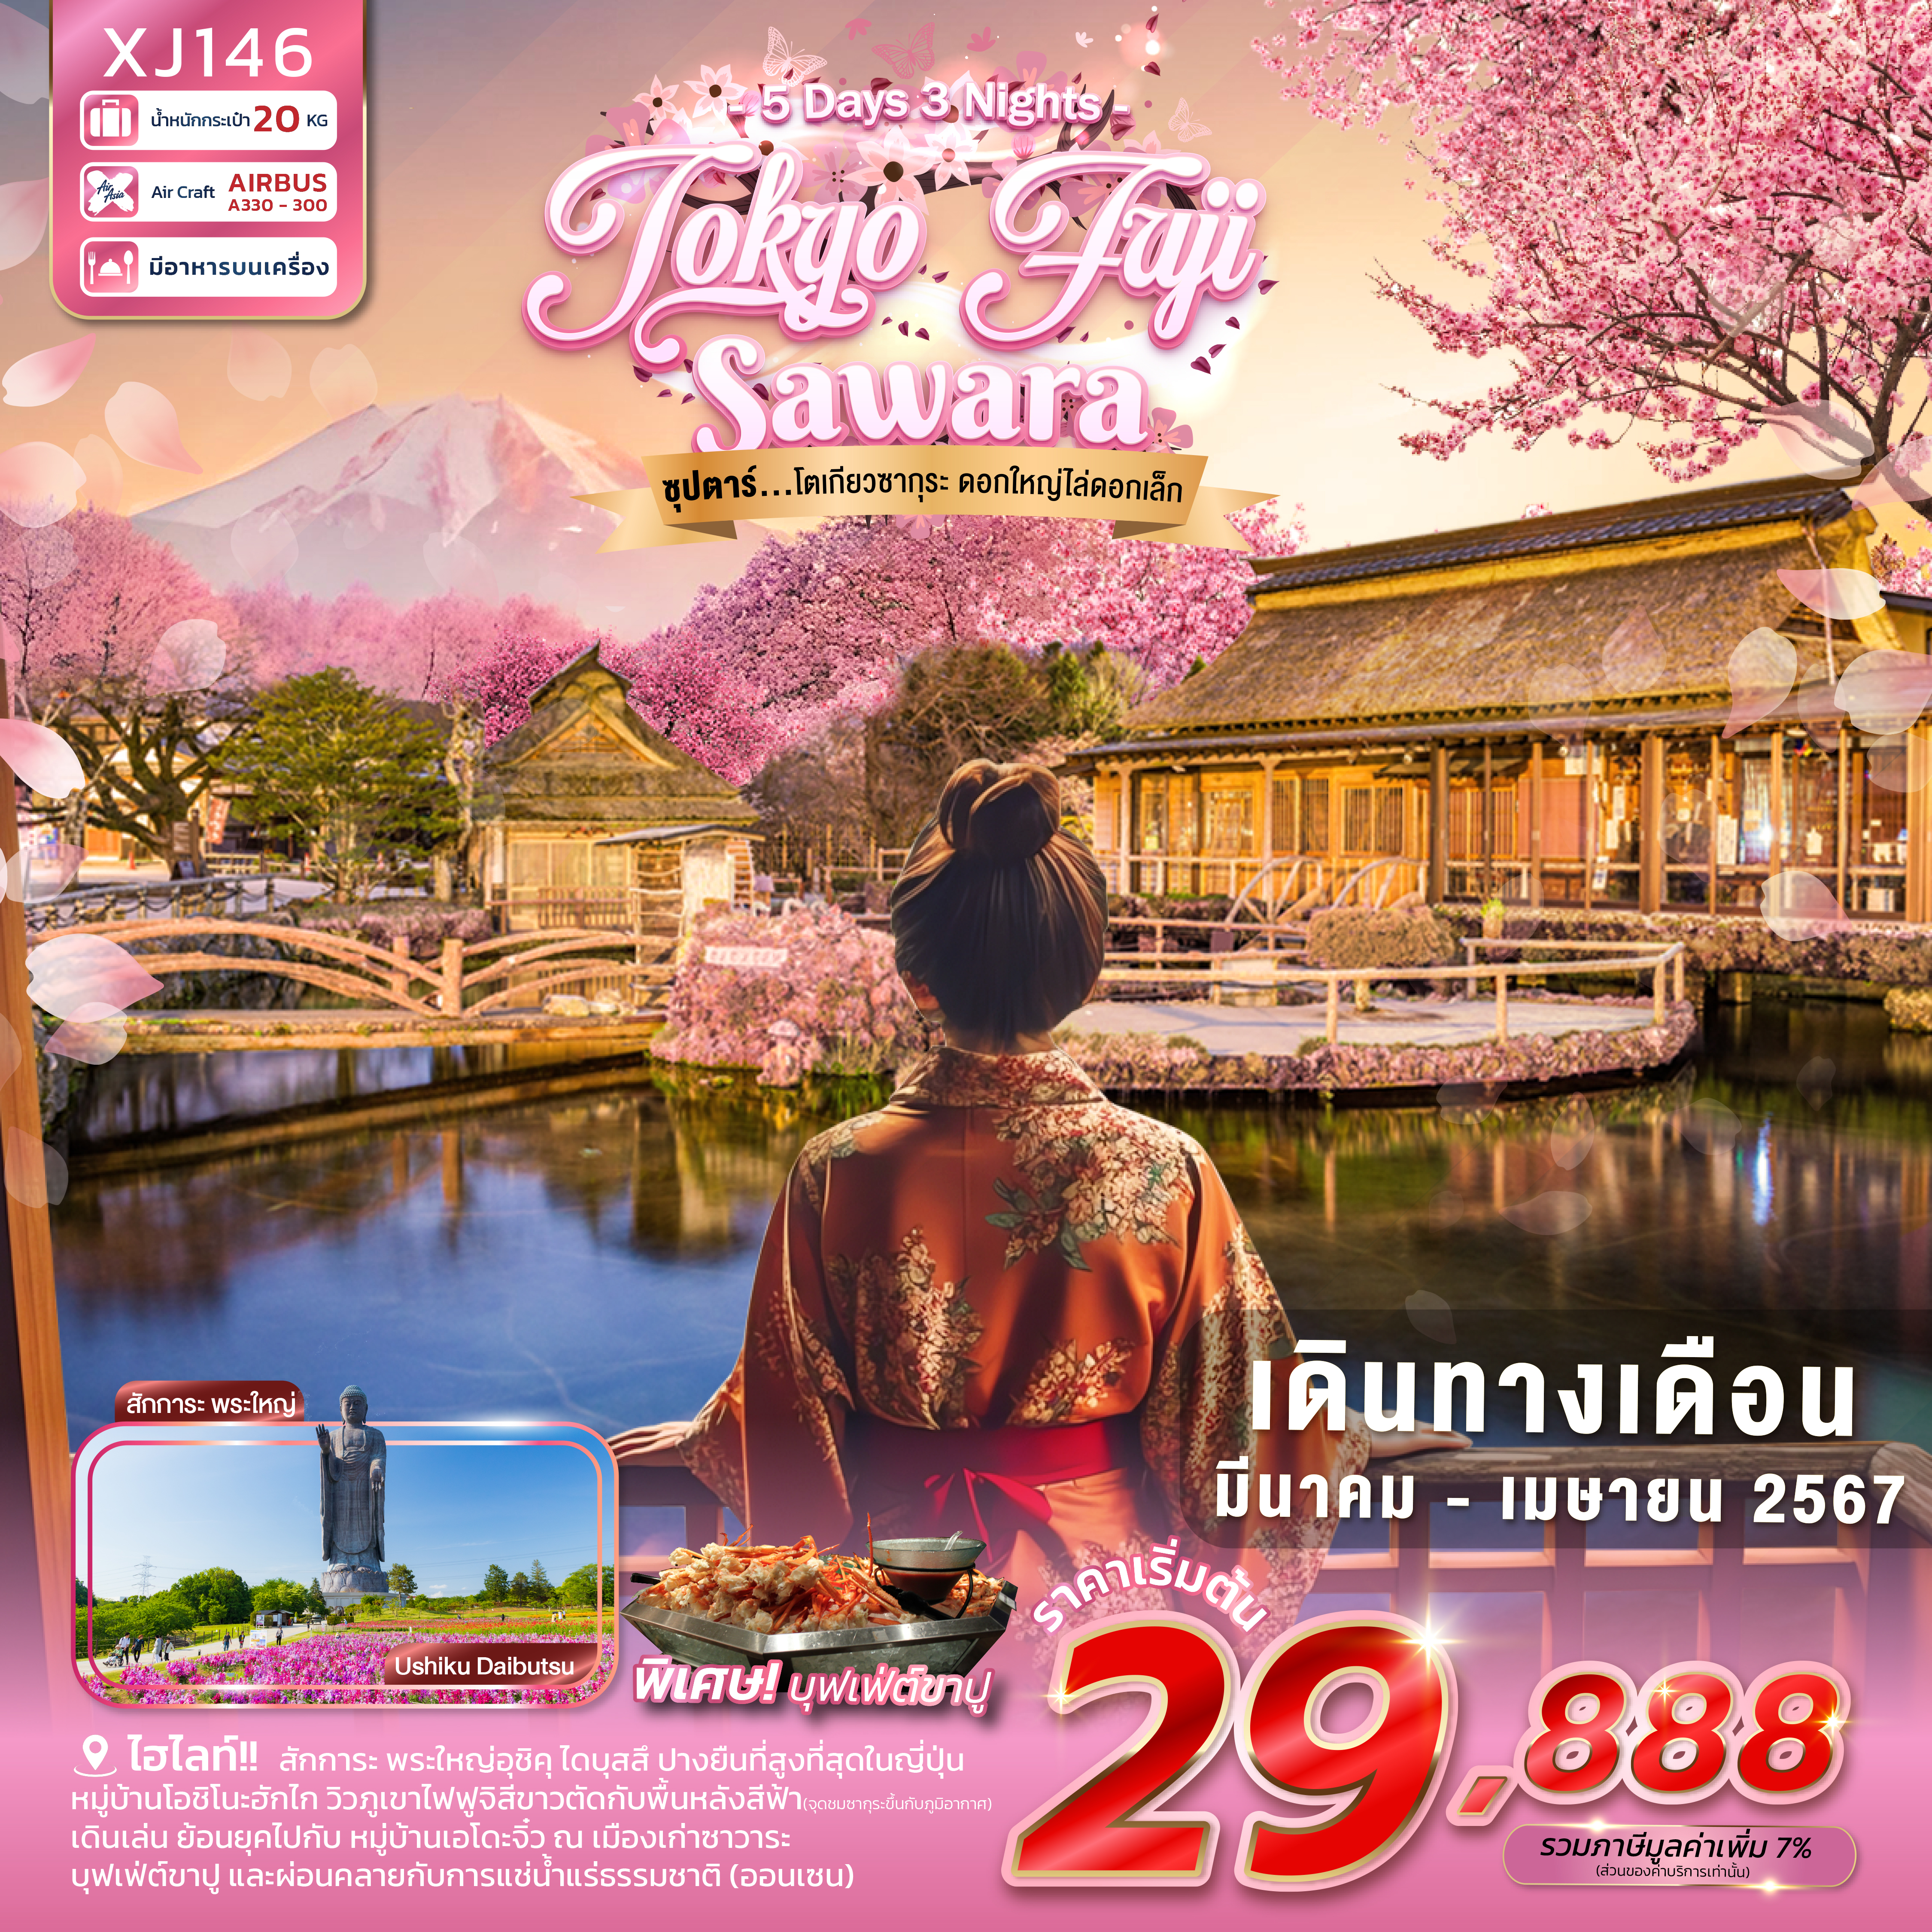 Tokyo Fuji Sawara...ดอกใหญ่ไล่ดอกเล็ก 5 วัน 3 คืน เดินทาง มีนาคม - เมษายน 67 เริ่มต้น 29,888.- Air Asia X (XJ)